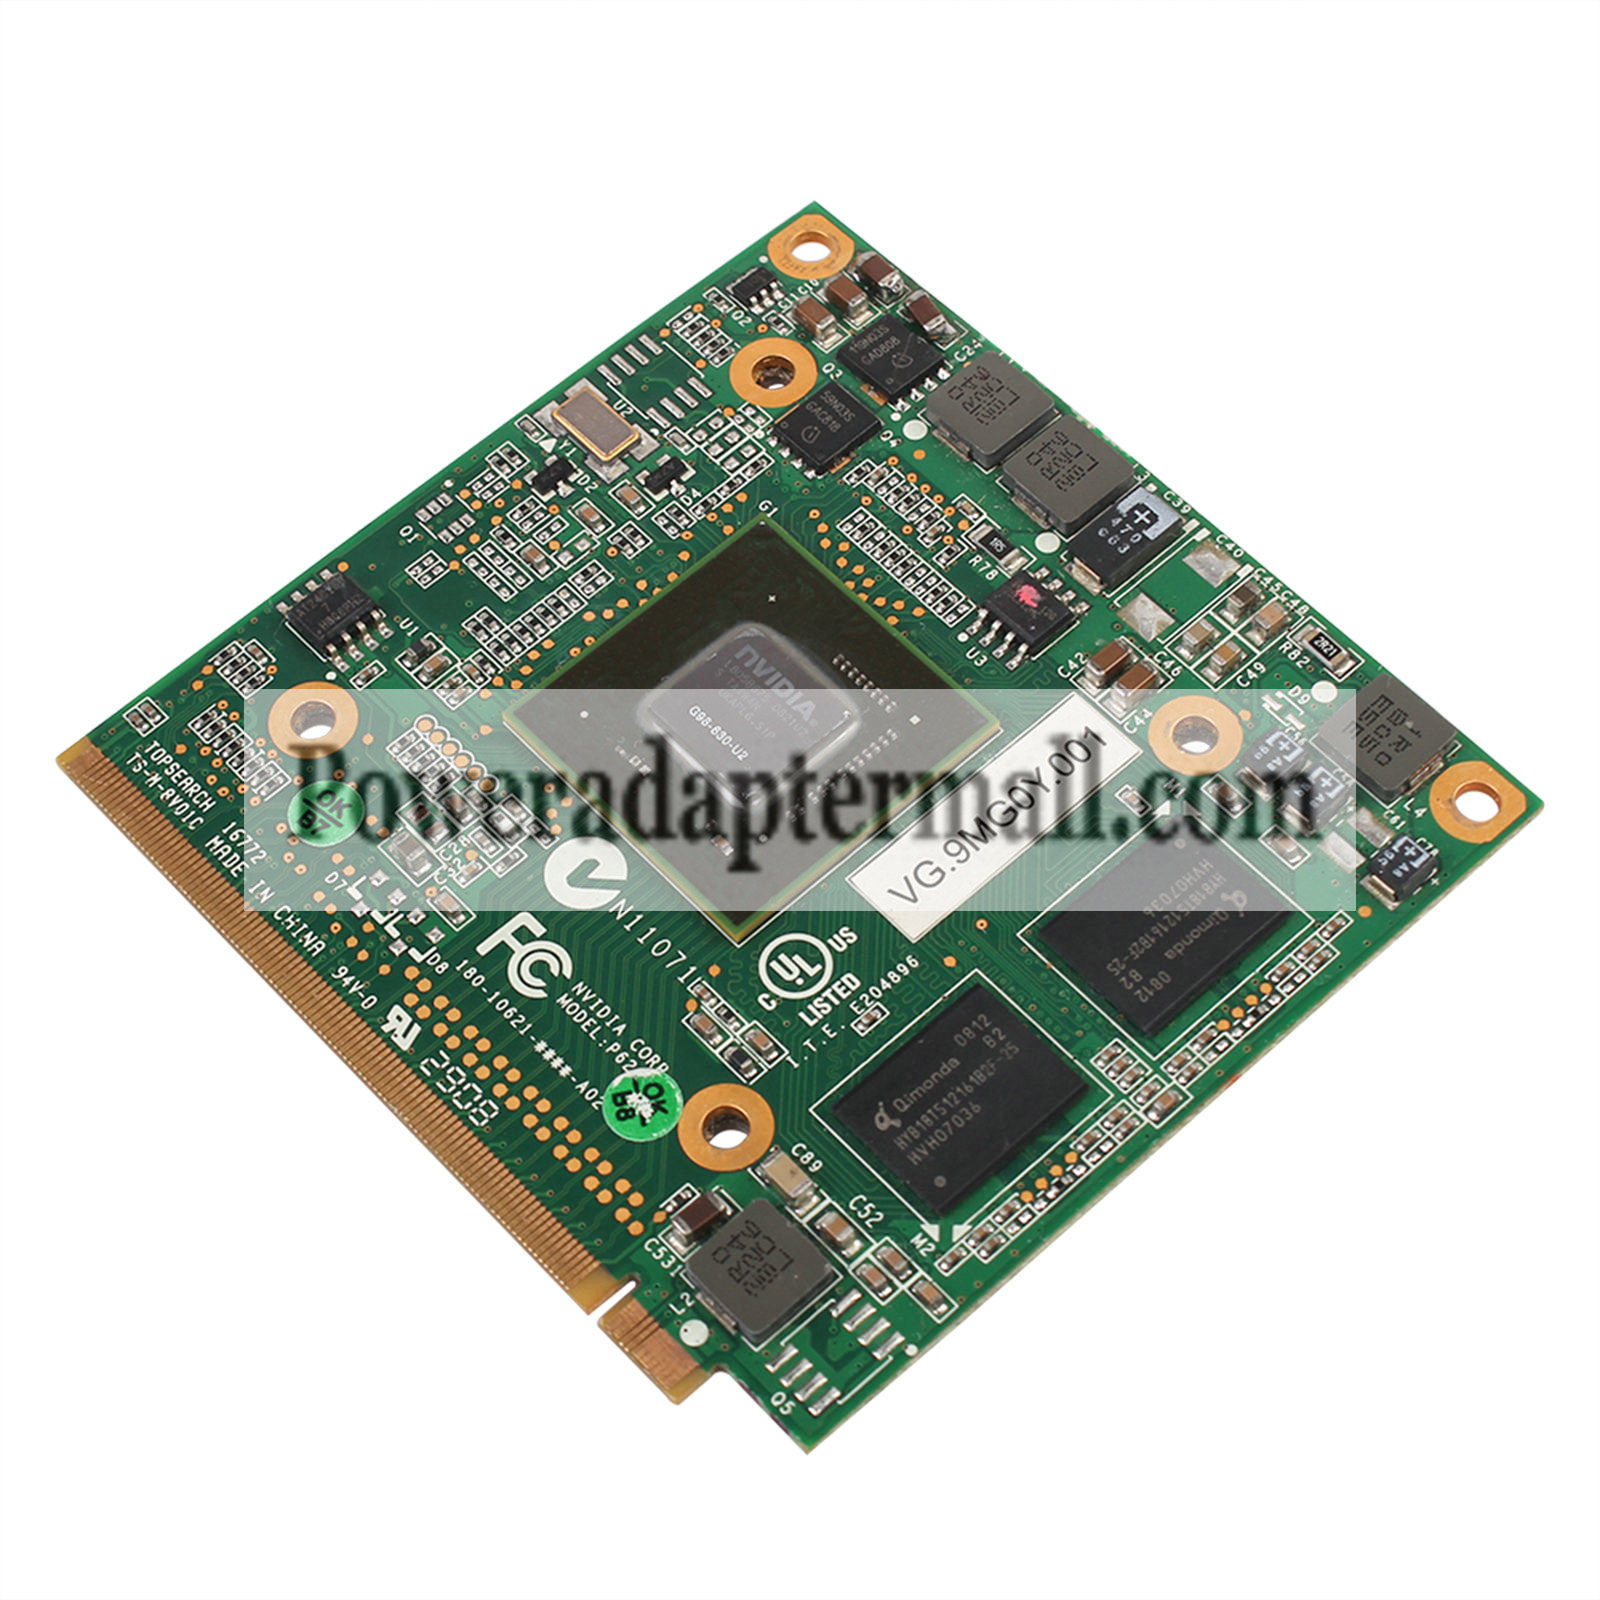 NVIDIA Geforce 9300M G98-630-U2 GS MXM II DDR2 256M VGA Card